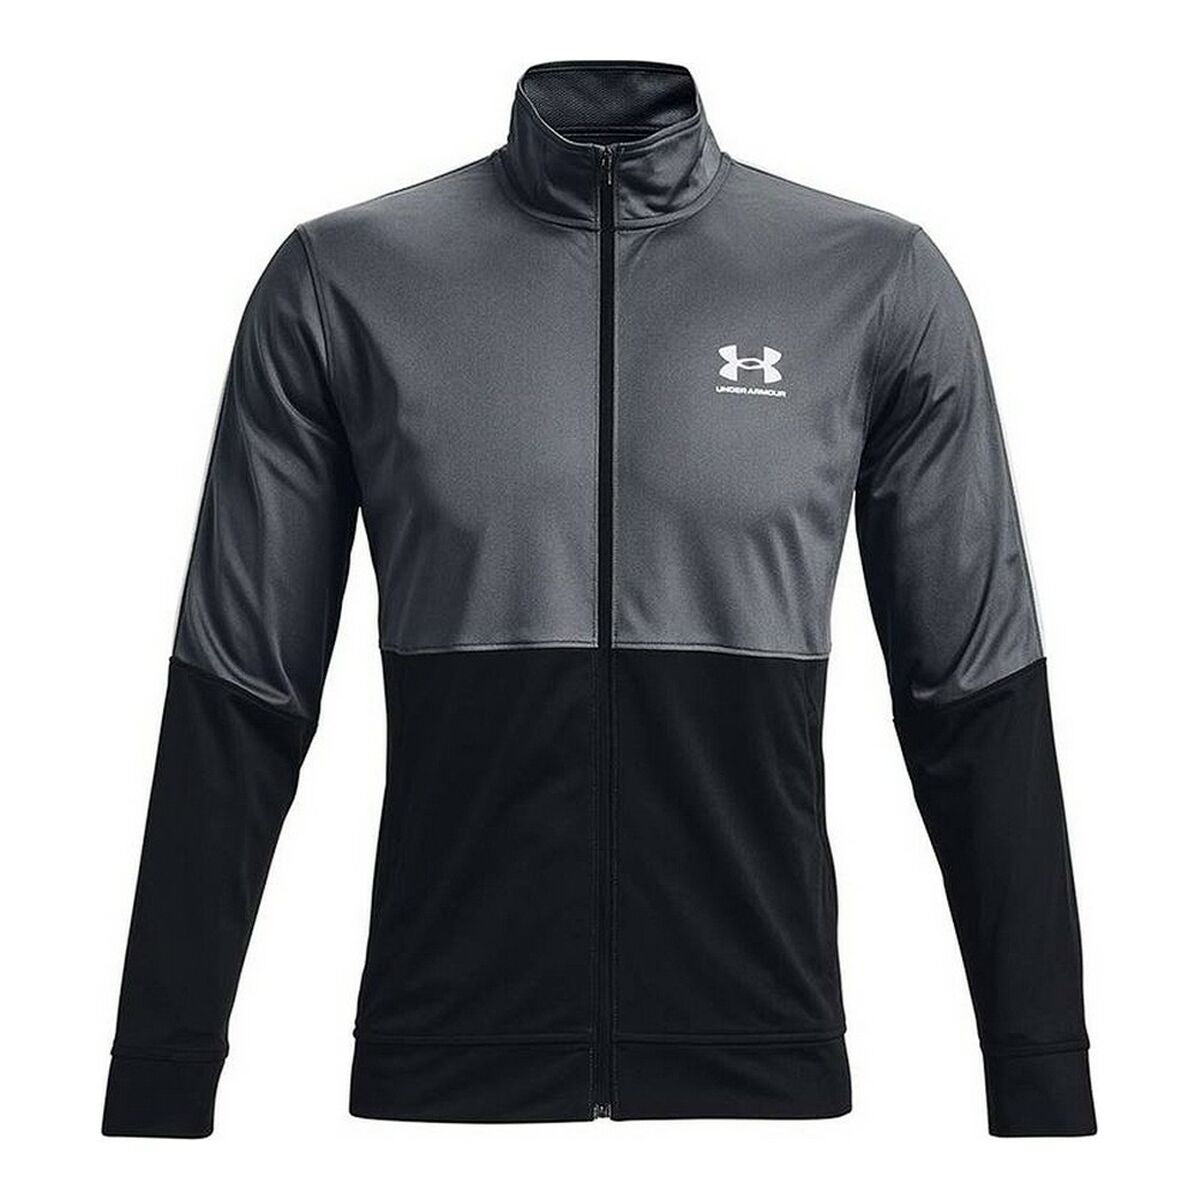 Men's Sports Jacket Under Armour Pique Light grey